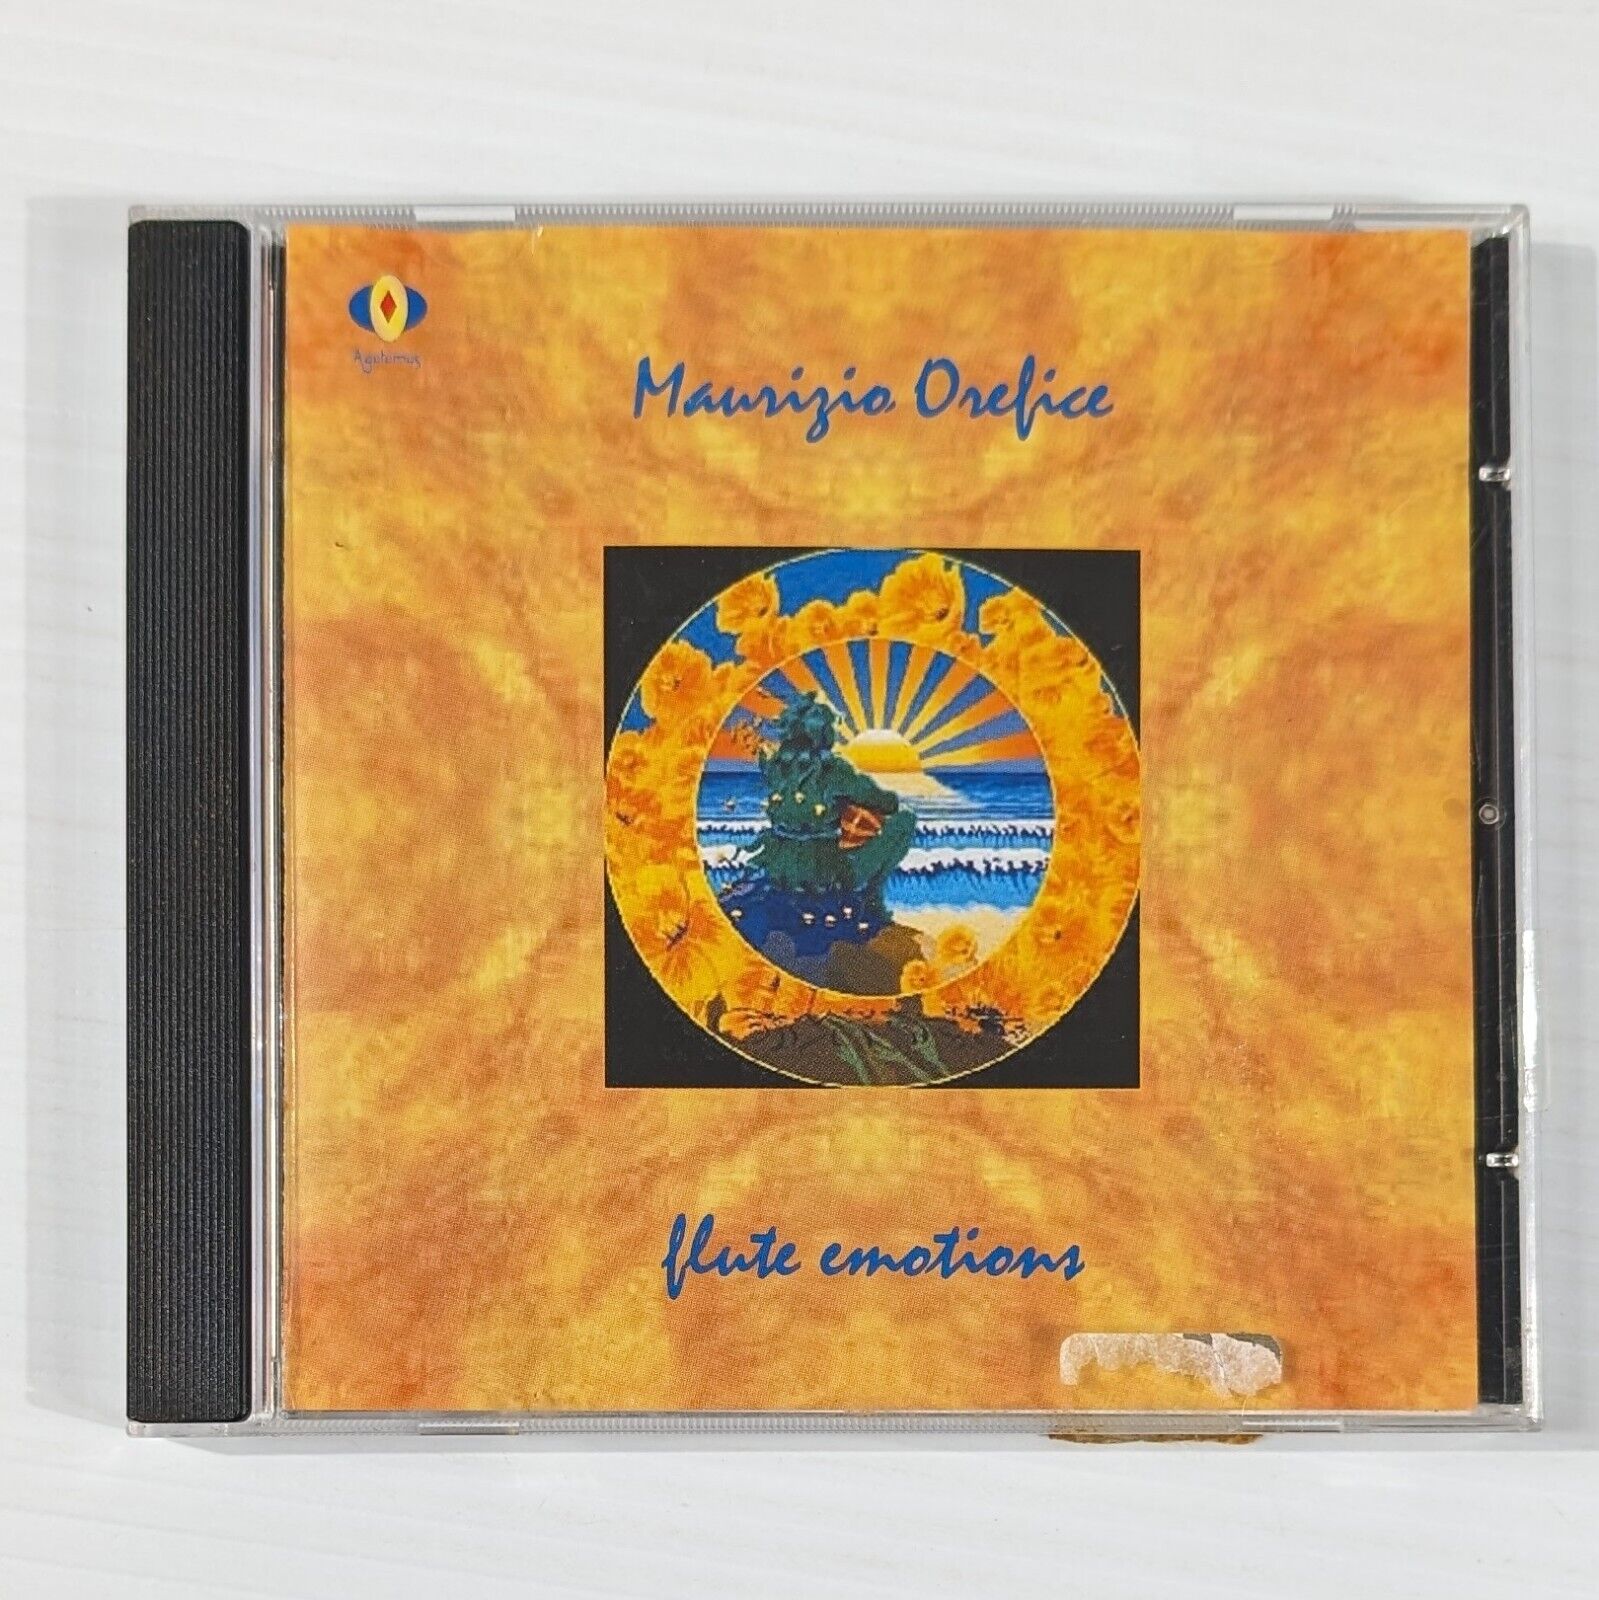 Maurizio Orefice - Flute Emotions CD